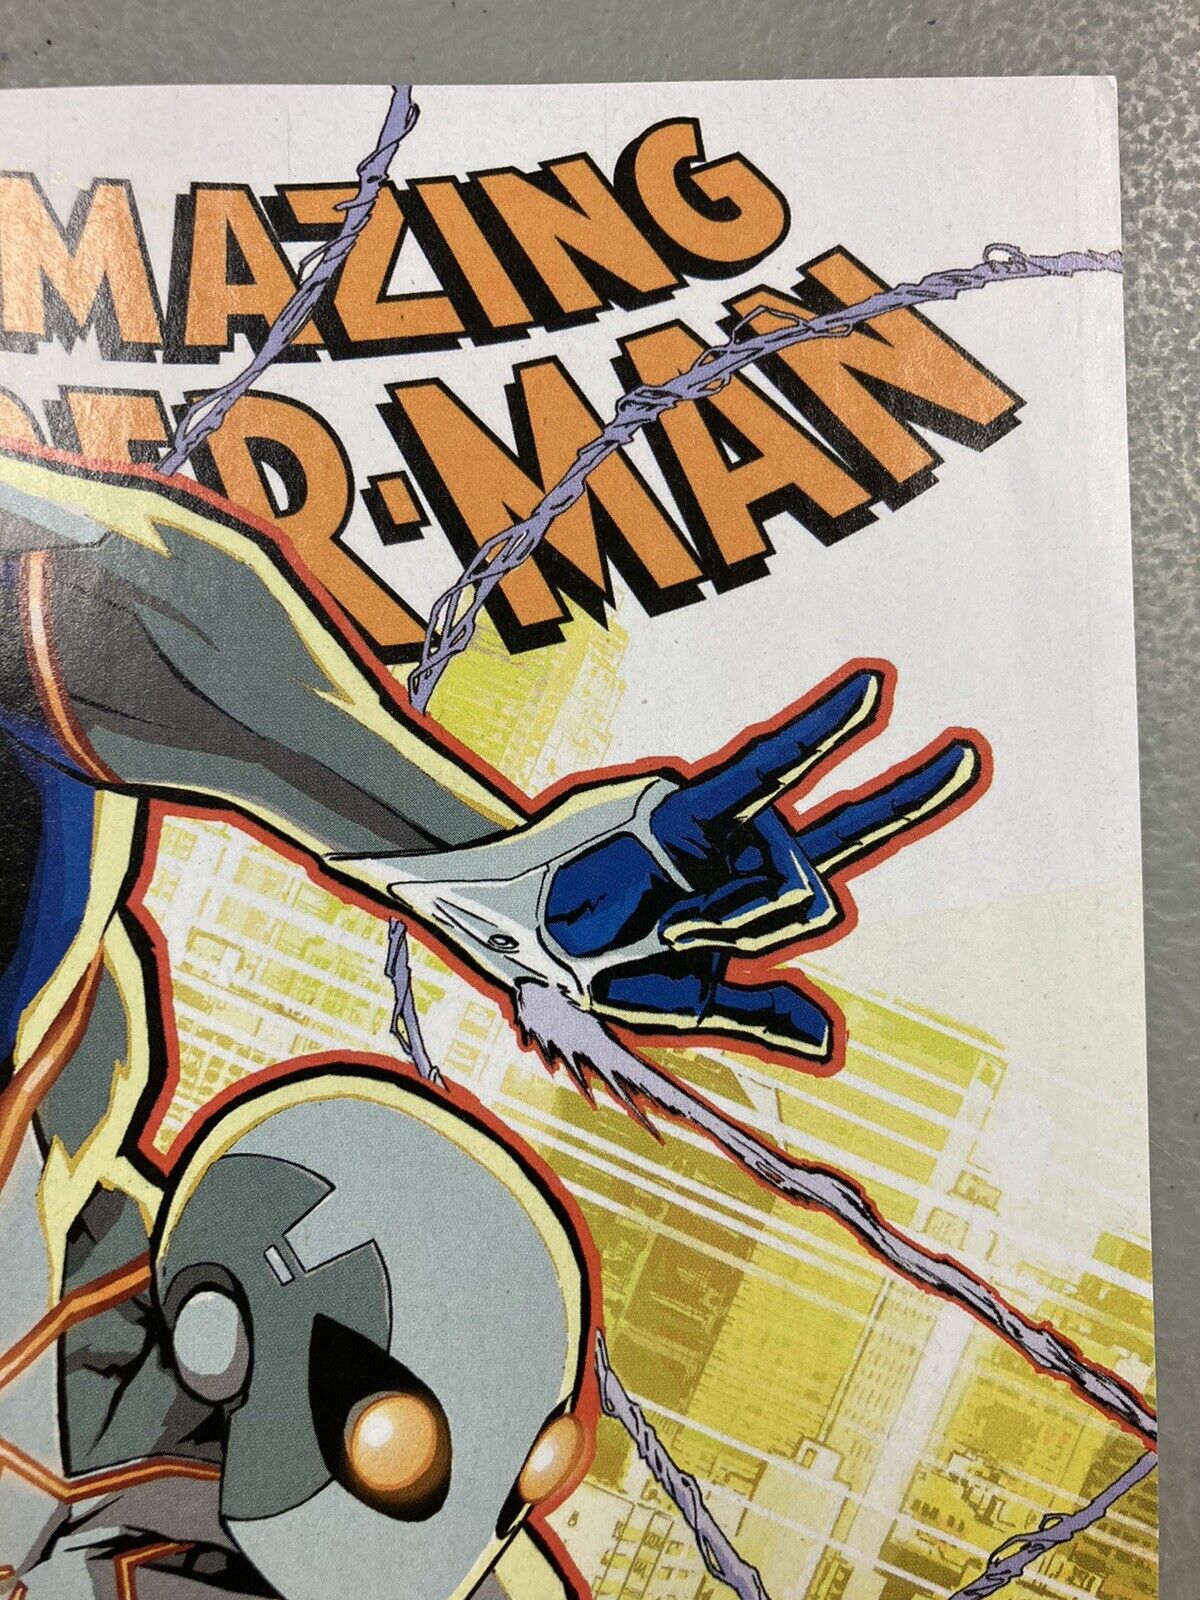 Amazing Spider-Man #62 1:10 Dustin Weaver Variant